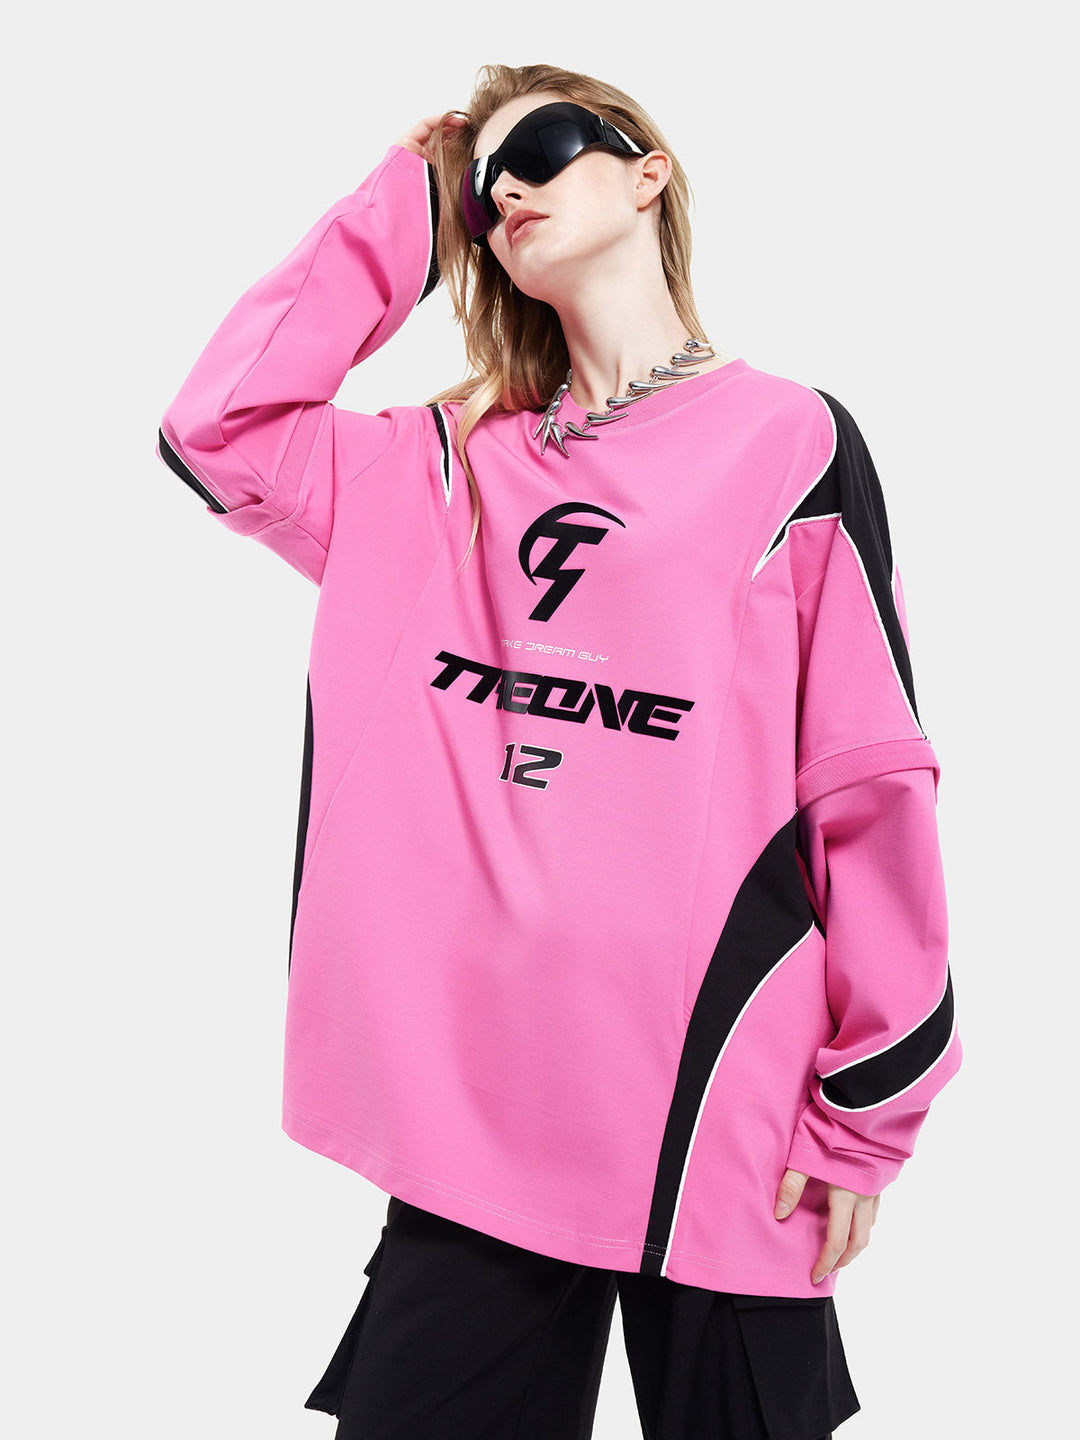 T-one Letter Print Patchwork Sweatshirt-Pink